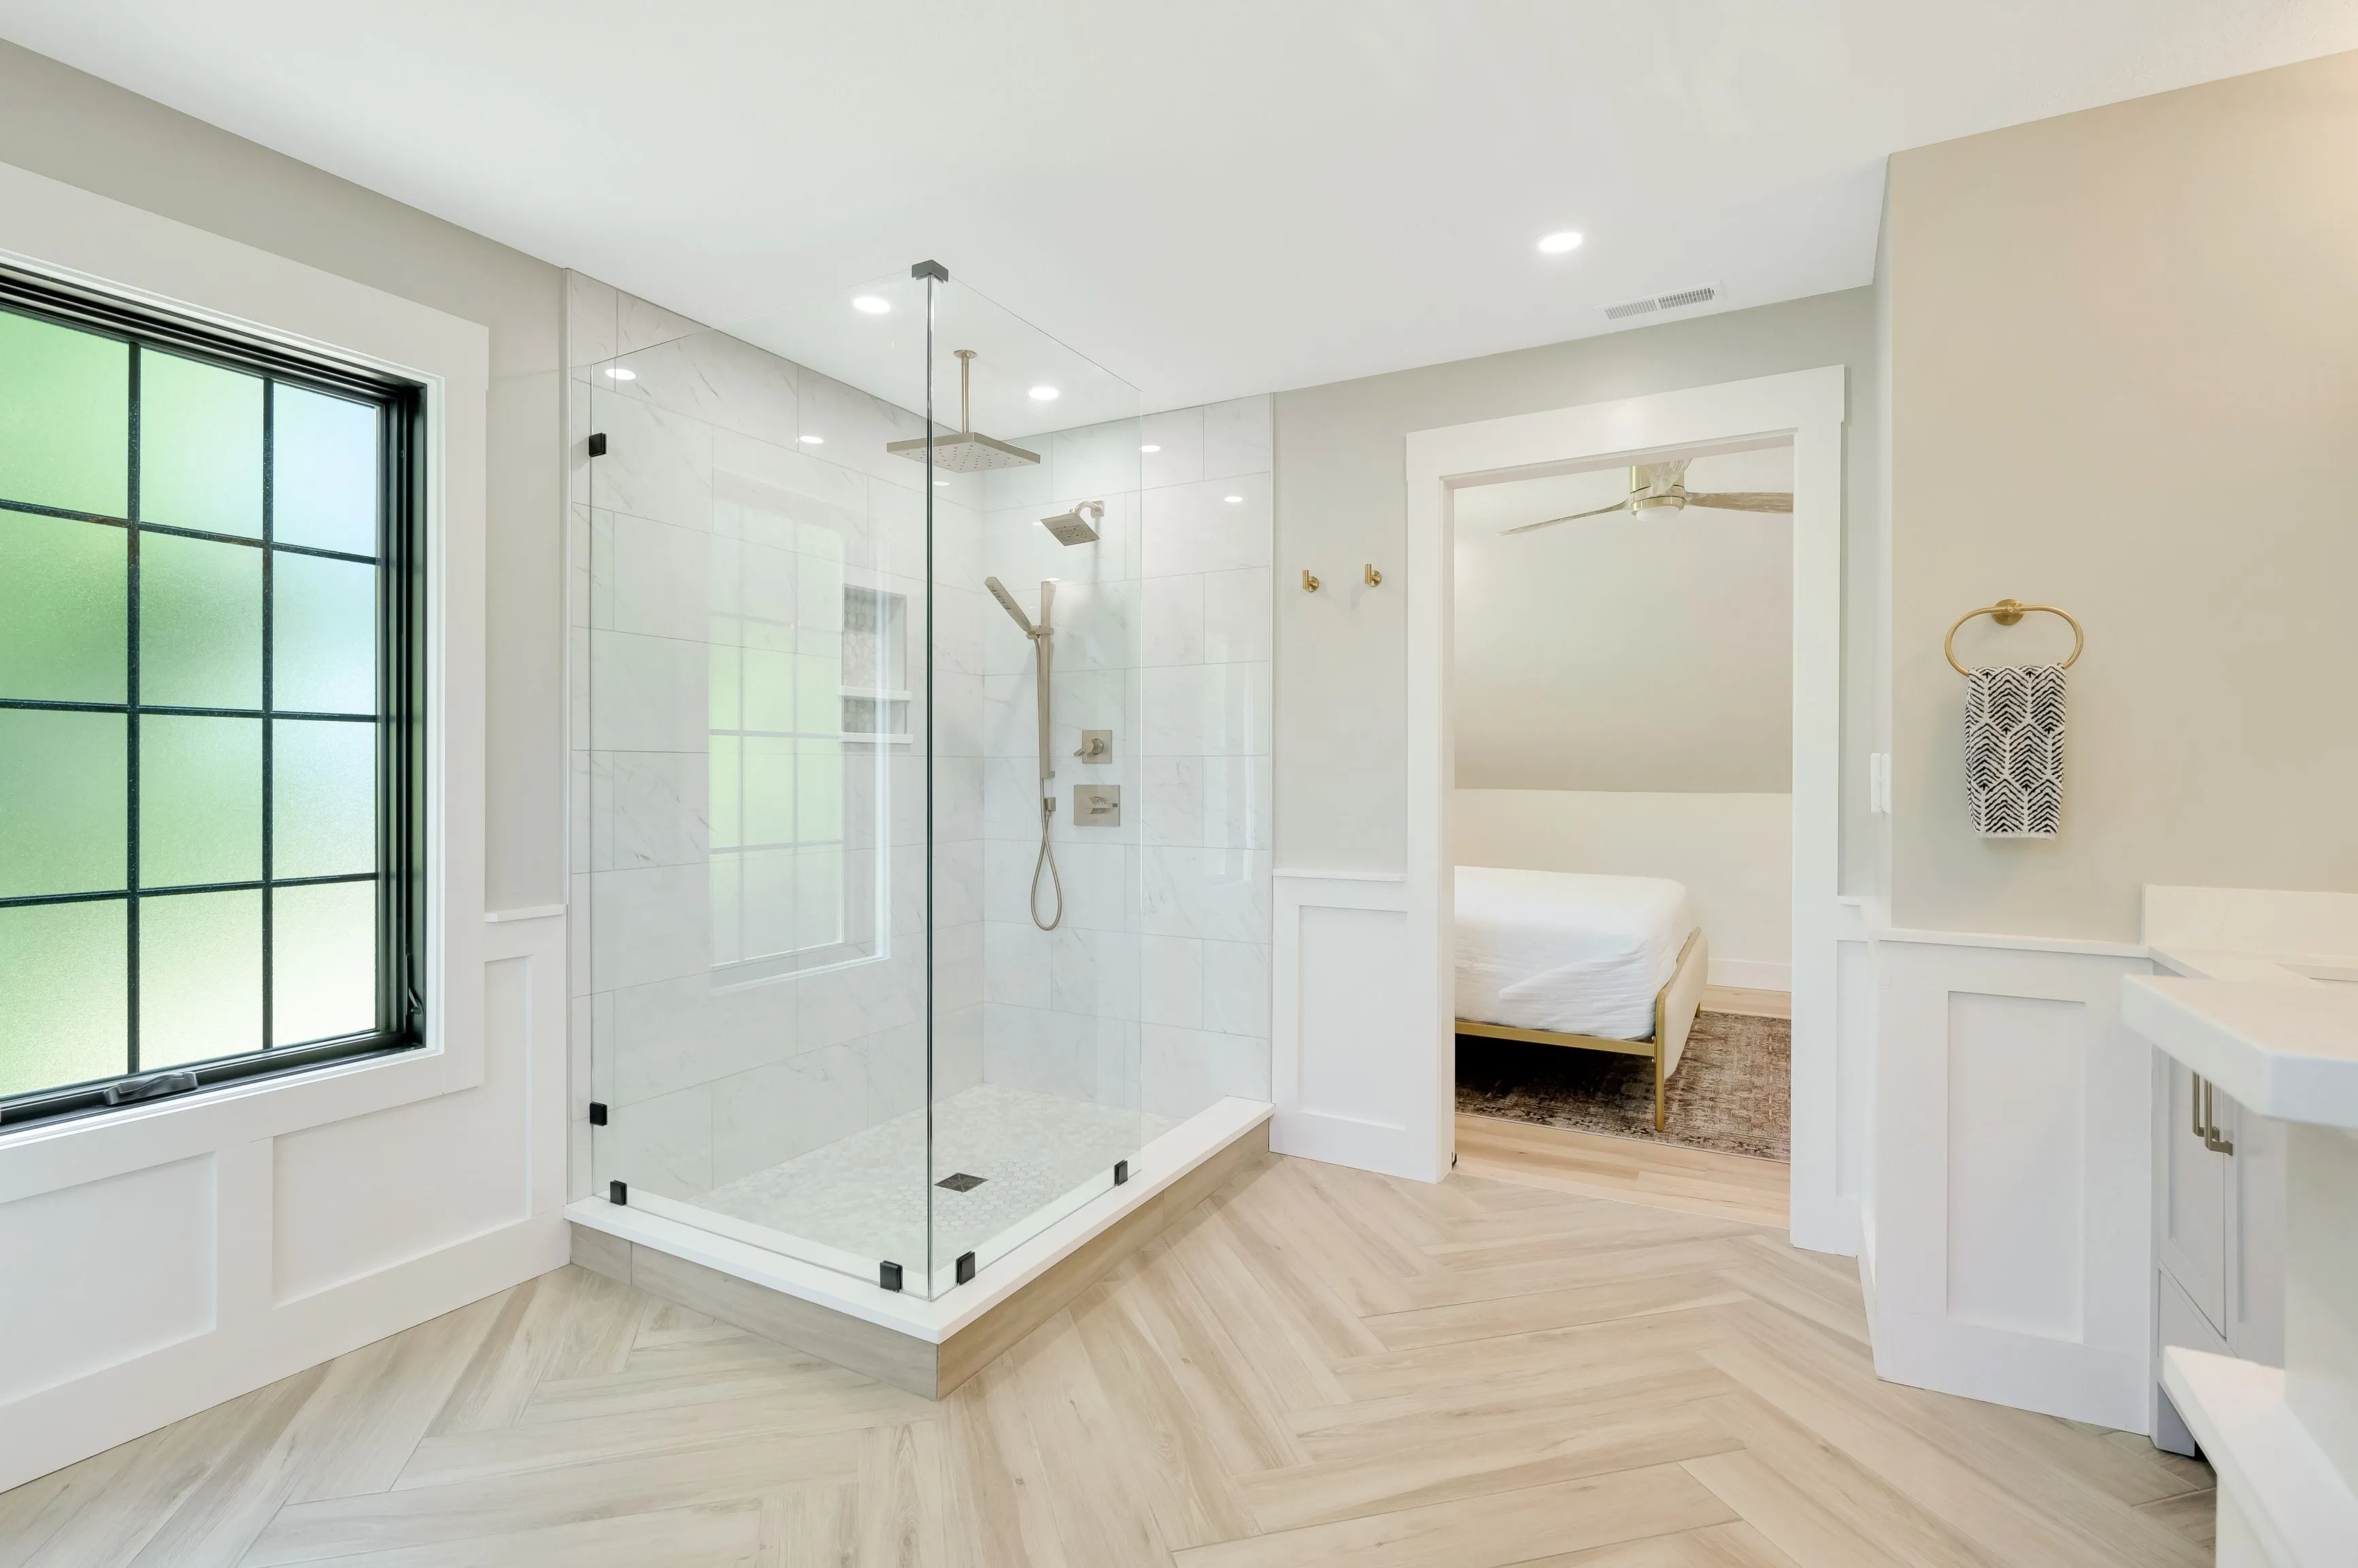 Modern bathroom interior with herringbone pattern floor, walk-in shower, double vanity, and view into bedroom area.